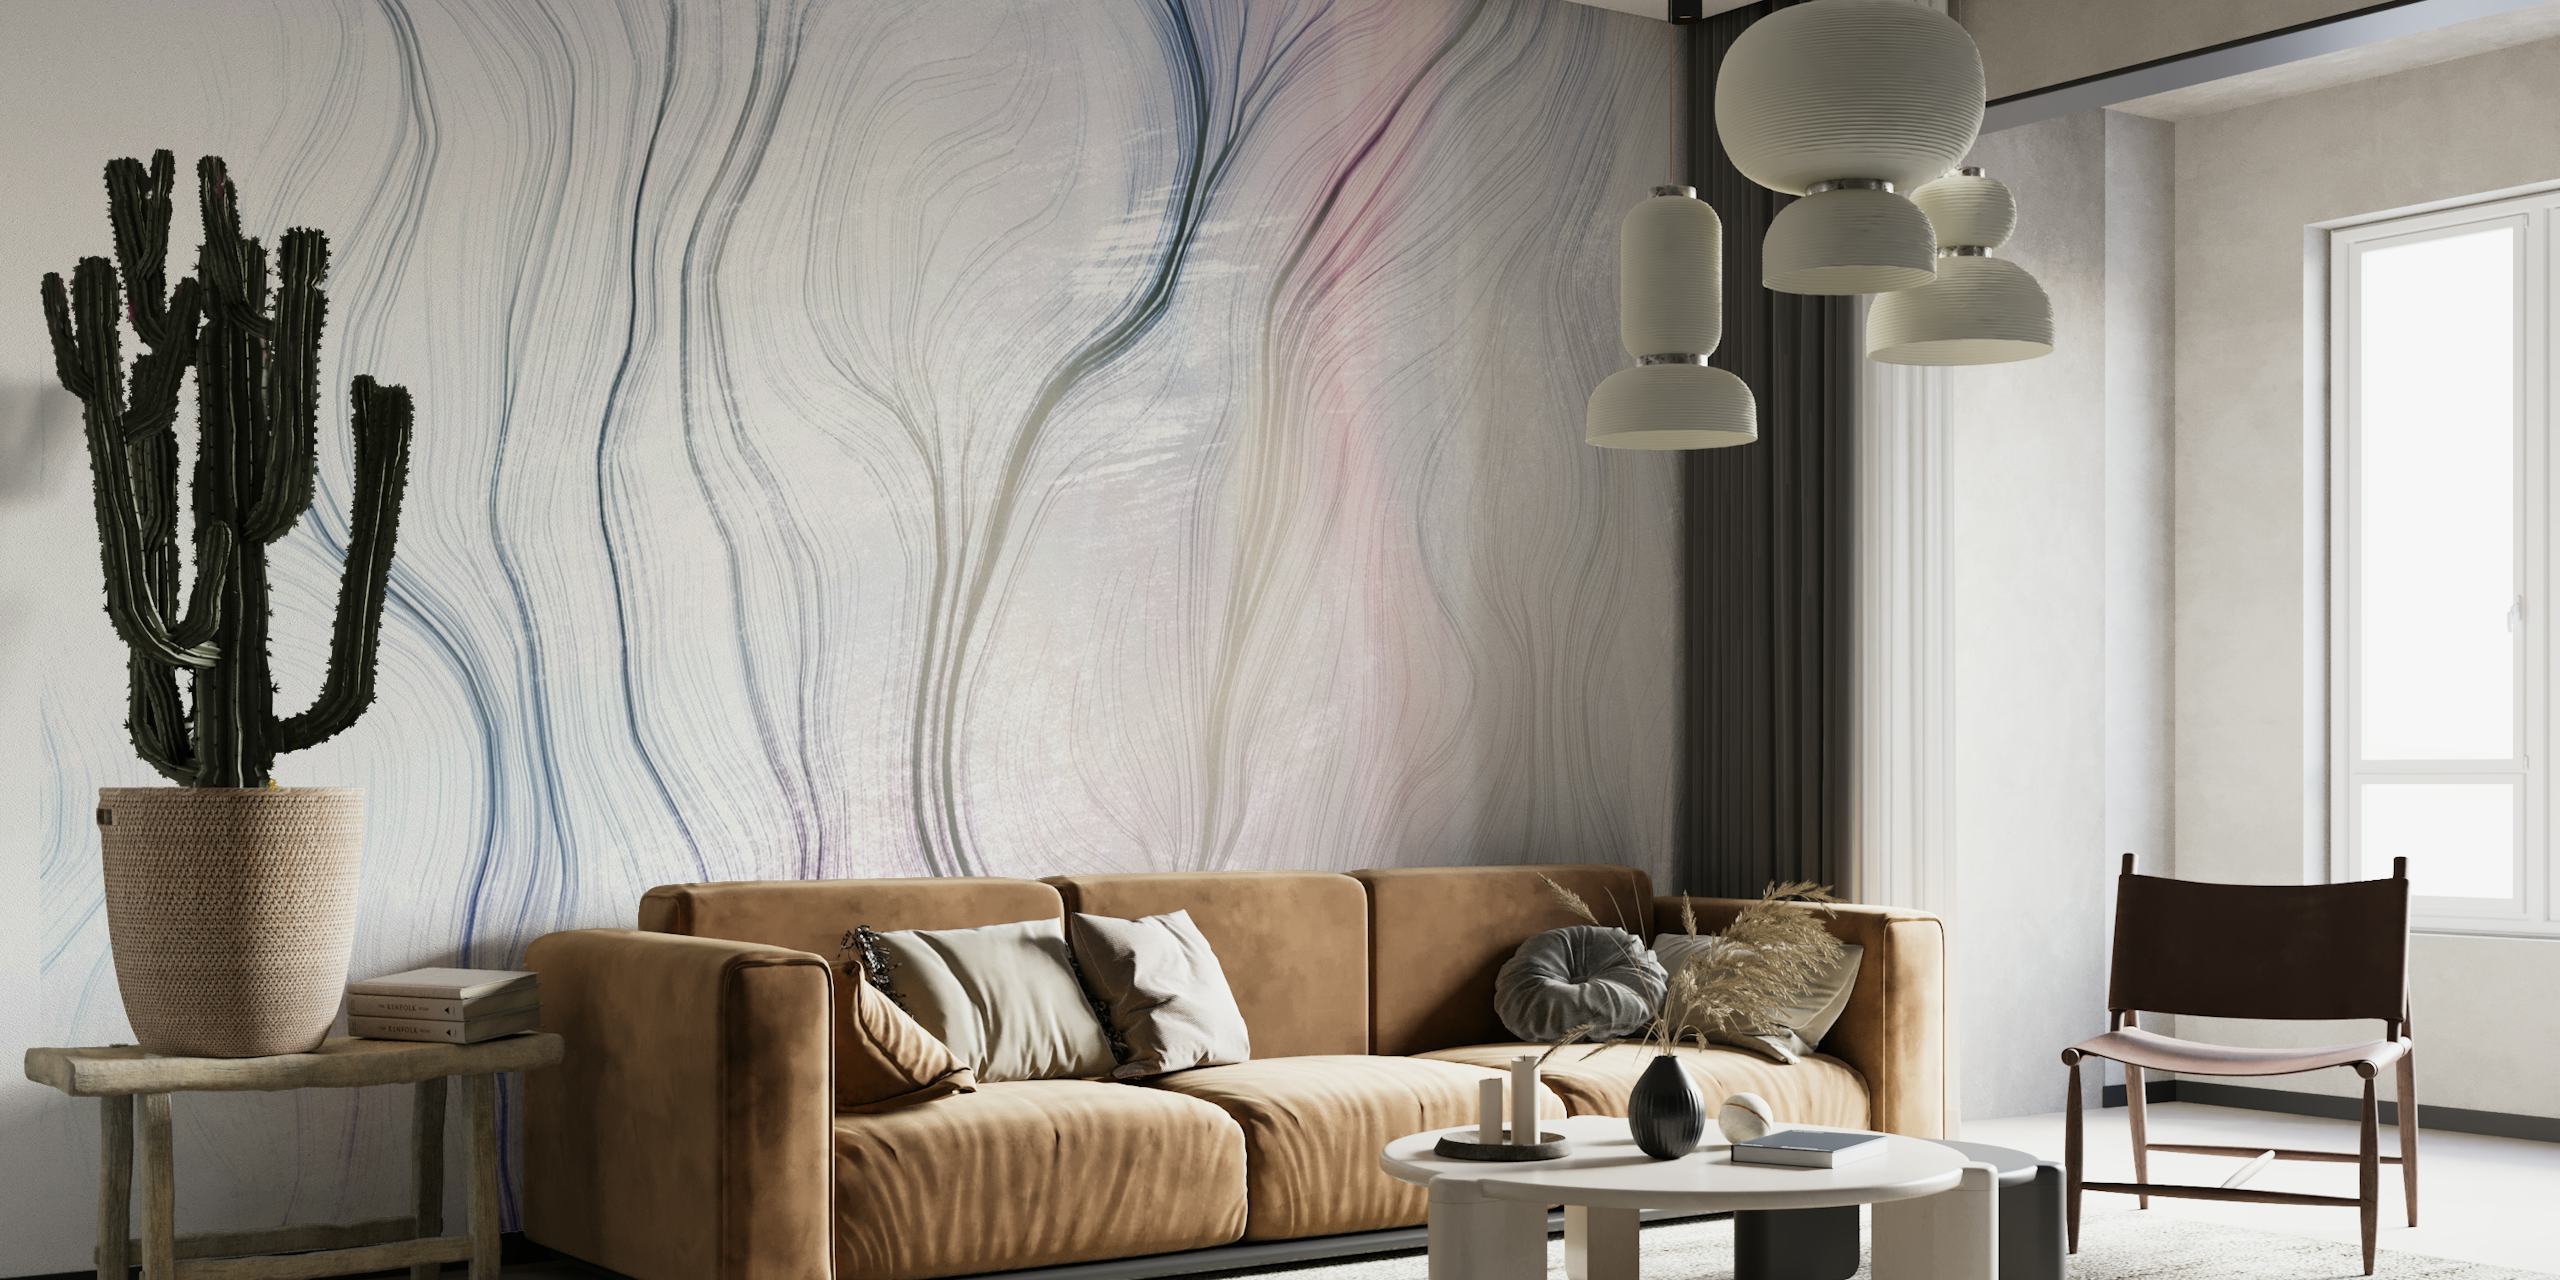 Fototapeta s abstraktními pastelovými liniemi 'Path 1' pro klidnou výzdobu pokoje.